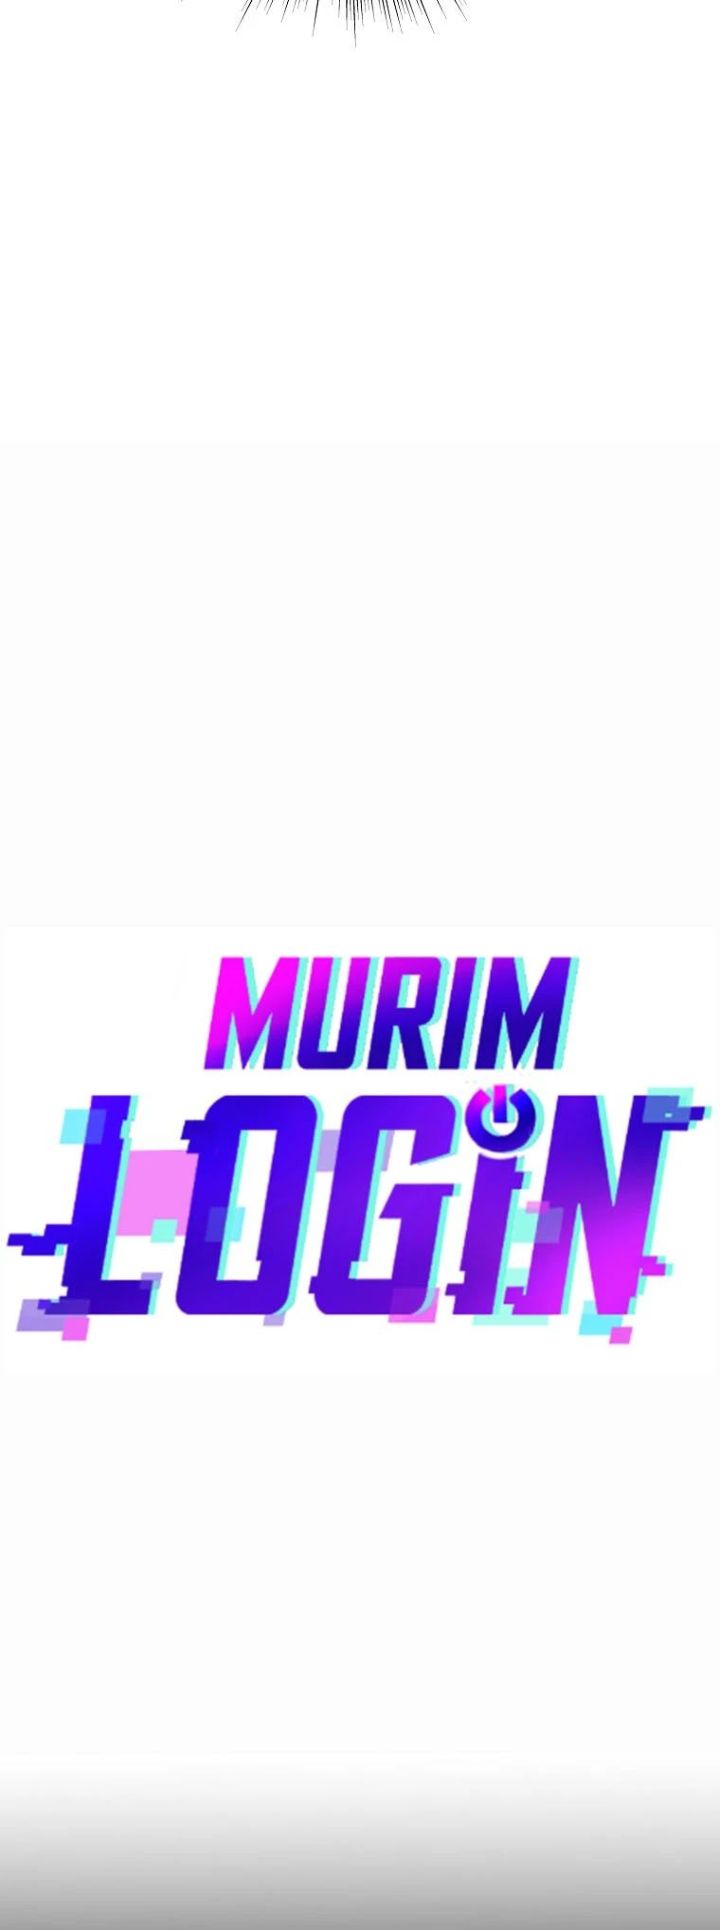 murim_login_108_27